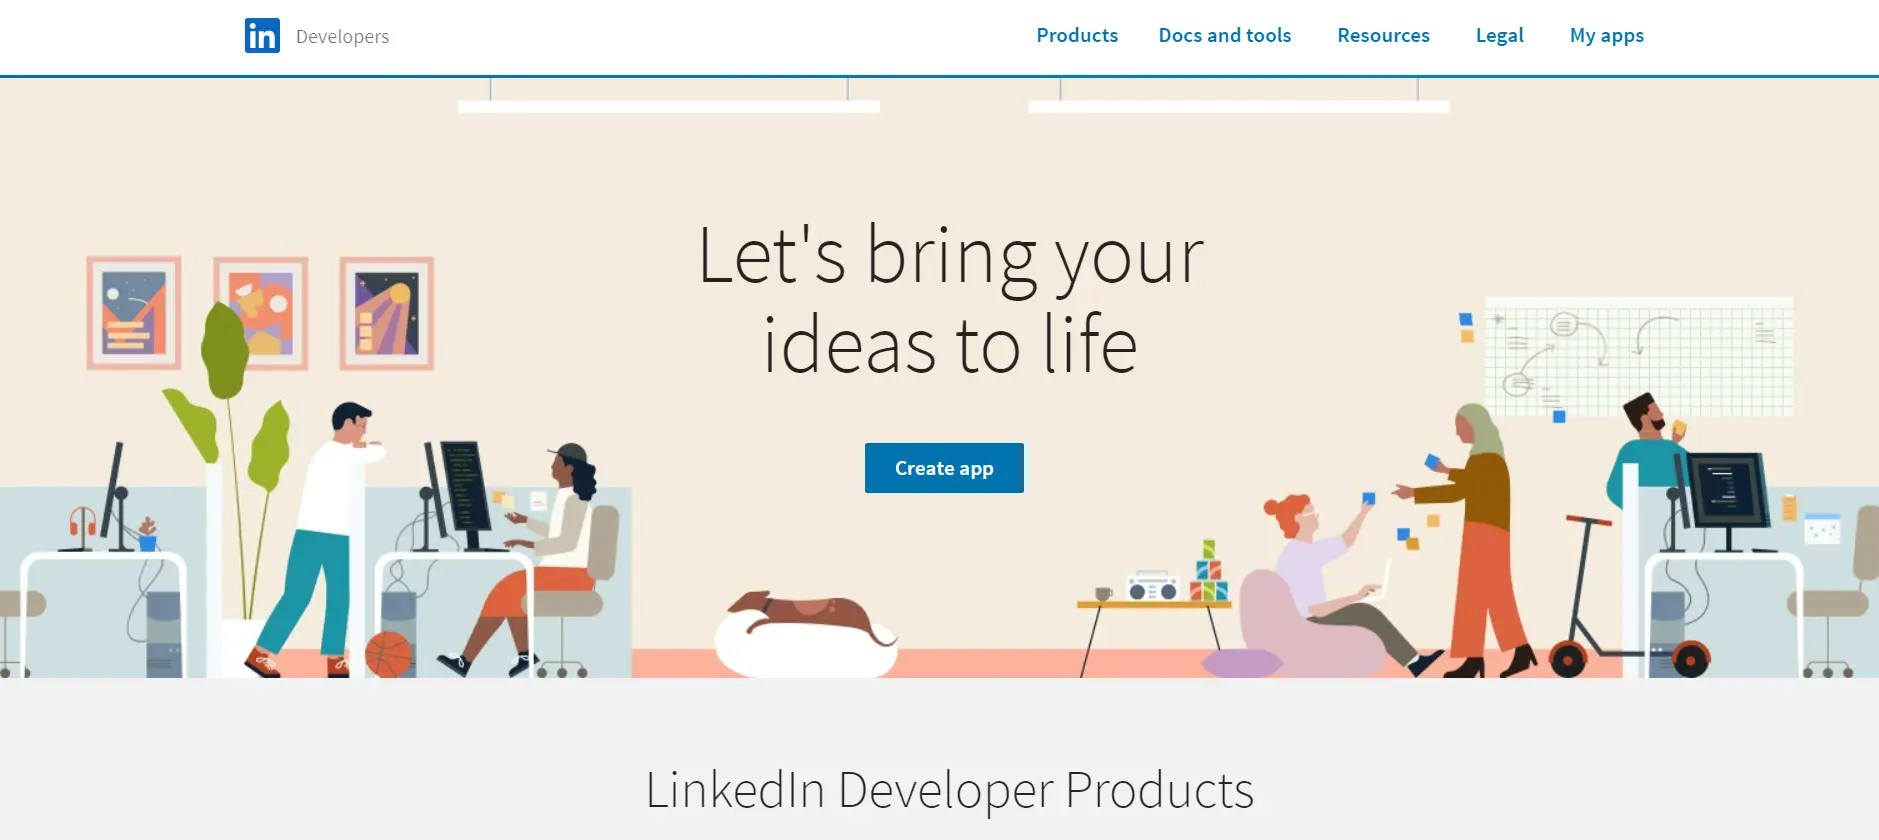 GrafanaSSO LinkedIn: Create-application